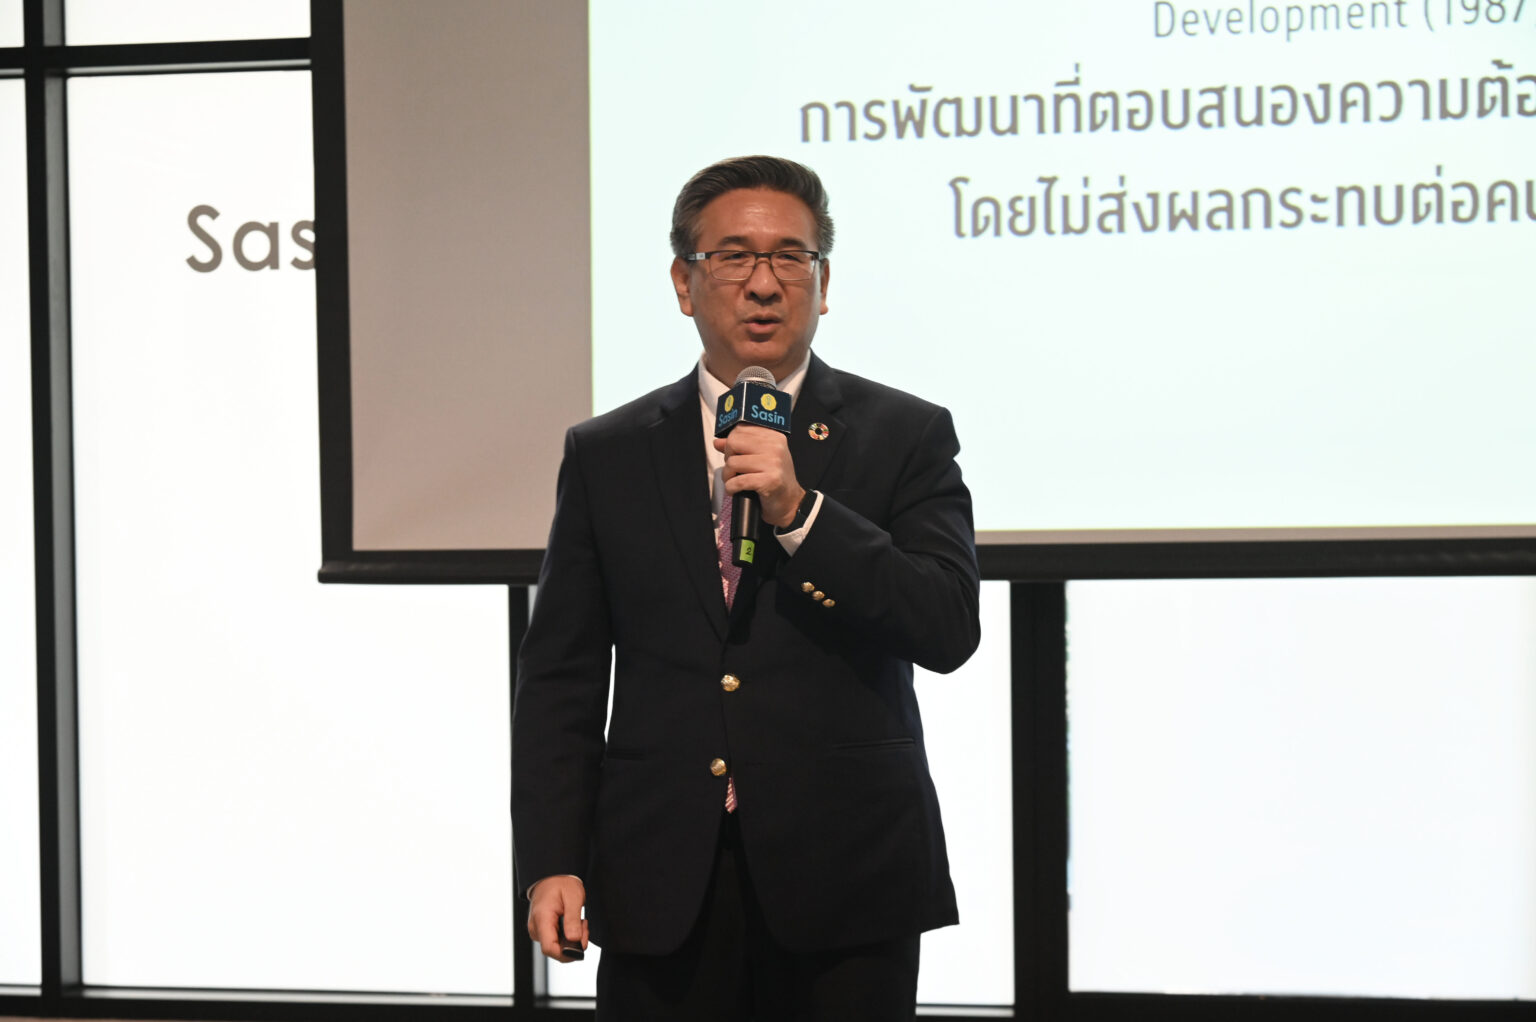 Asst. Prof. Dr. Vorapat Inkarojrit,  
Assistant President of Chulalongkorn University 